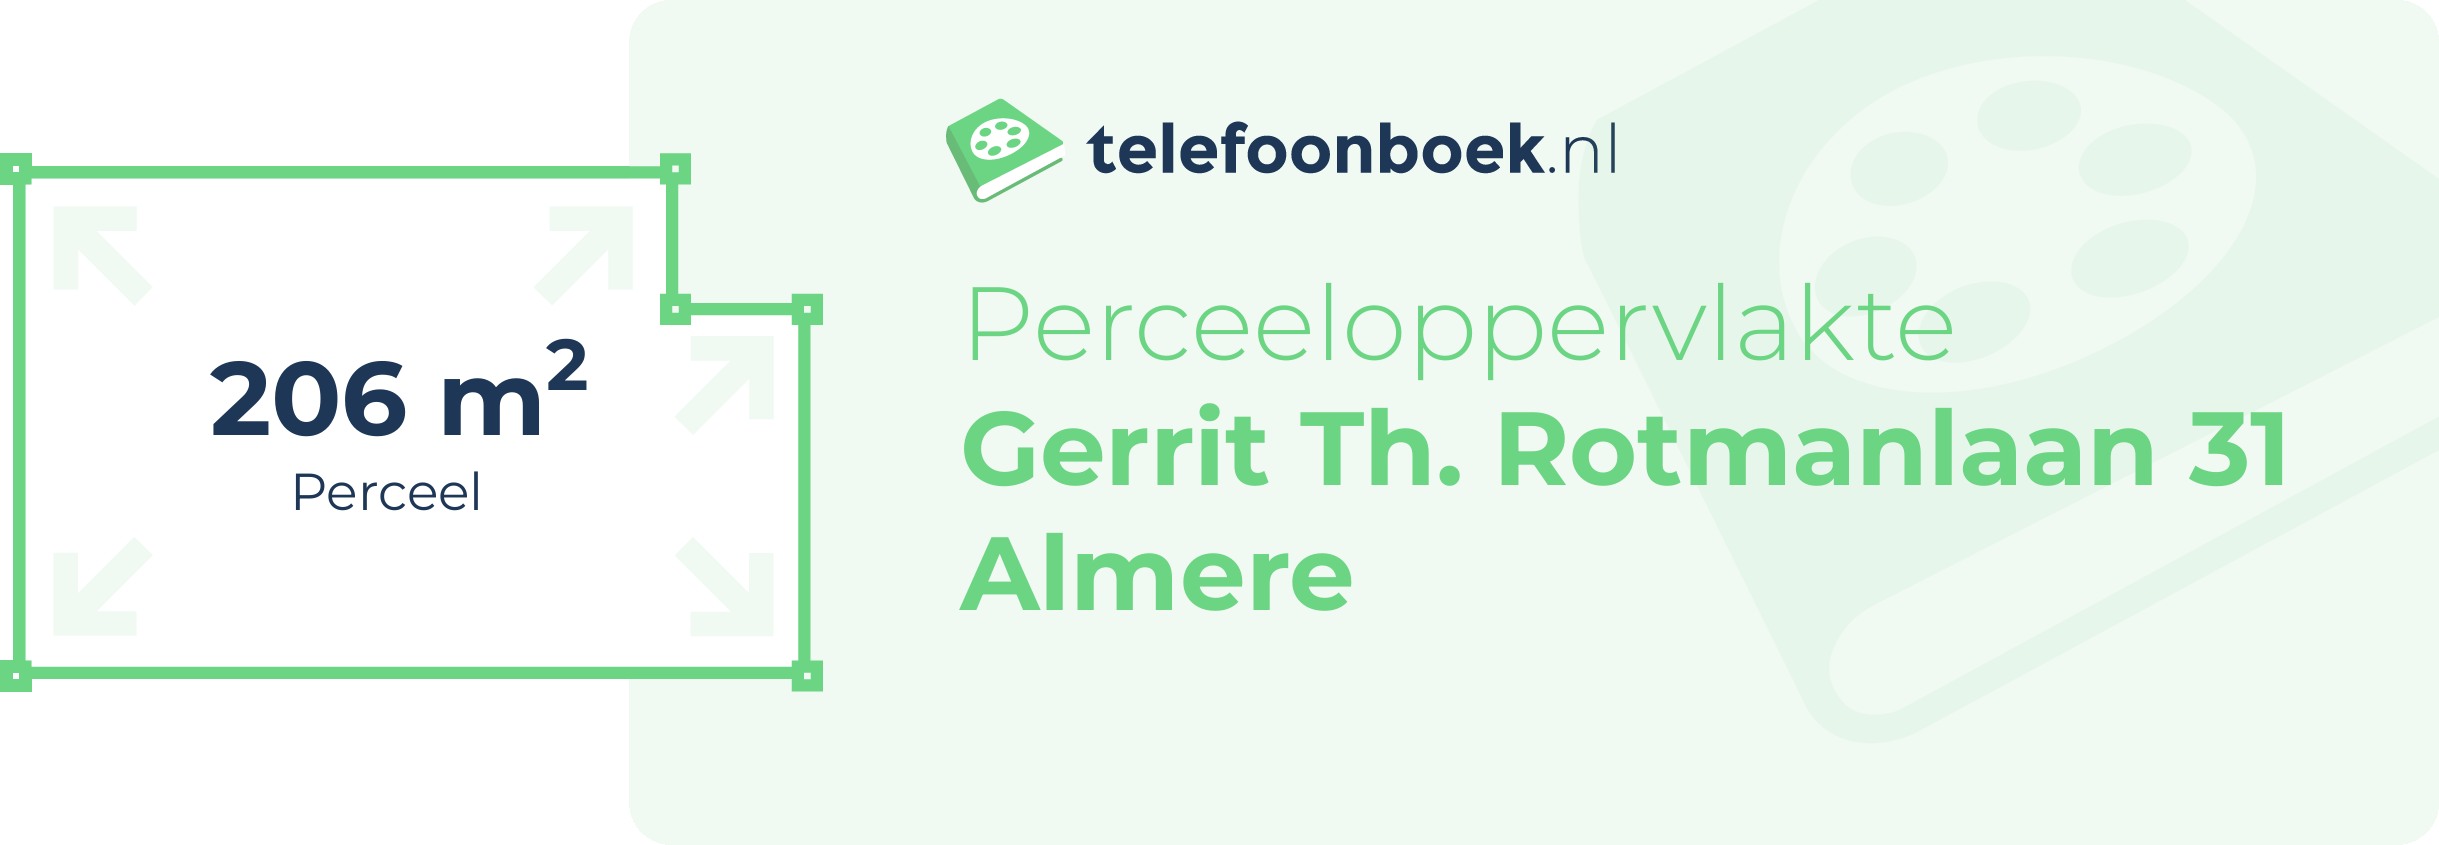 Perceeloppervlakte Gerrit Th. Rotmanlaan 31 Almere